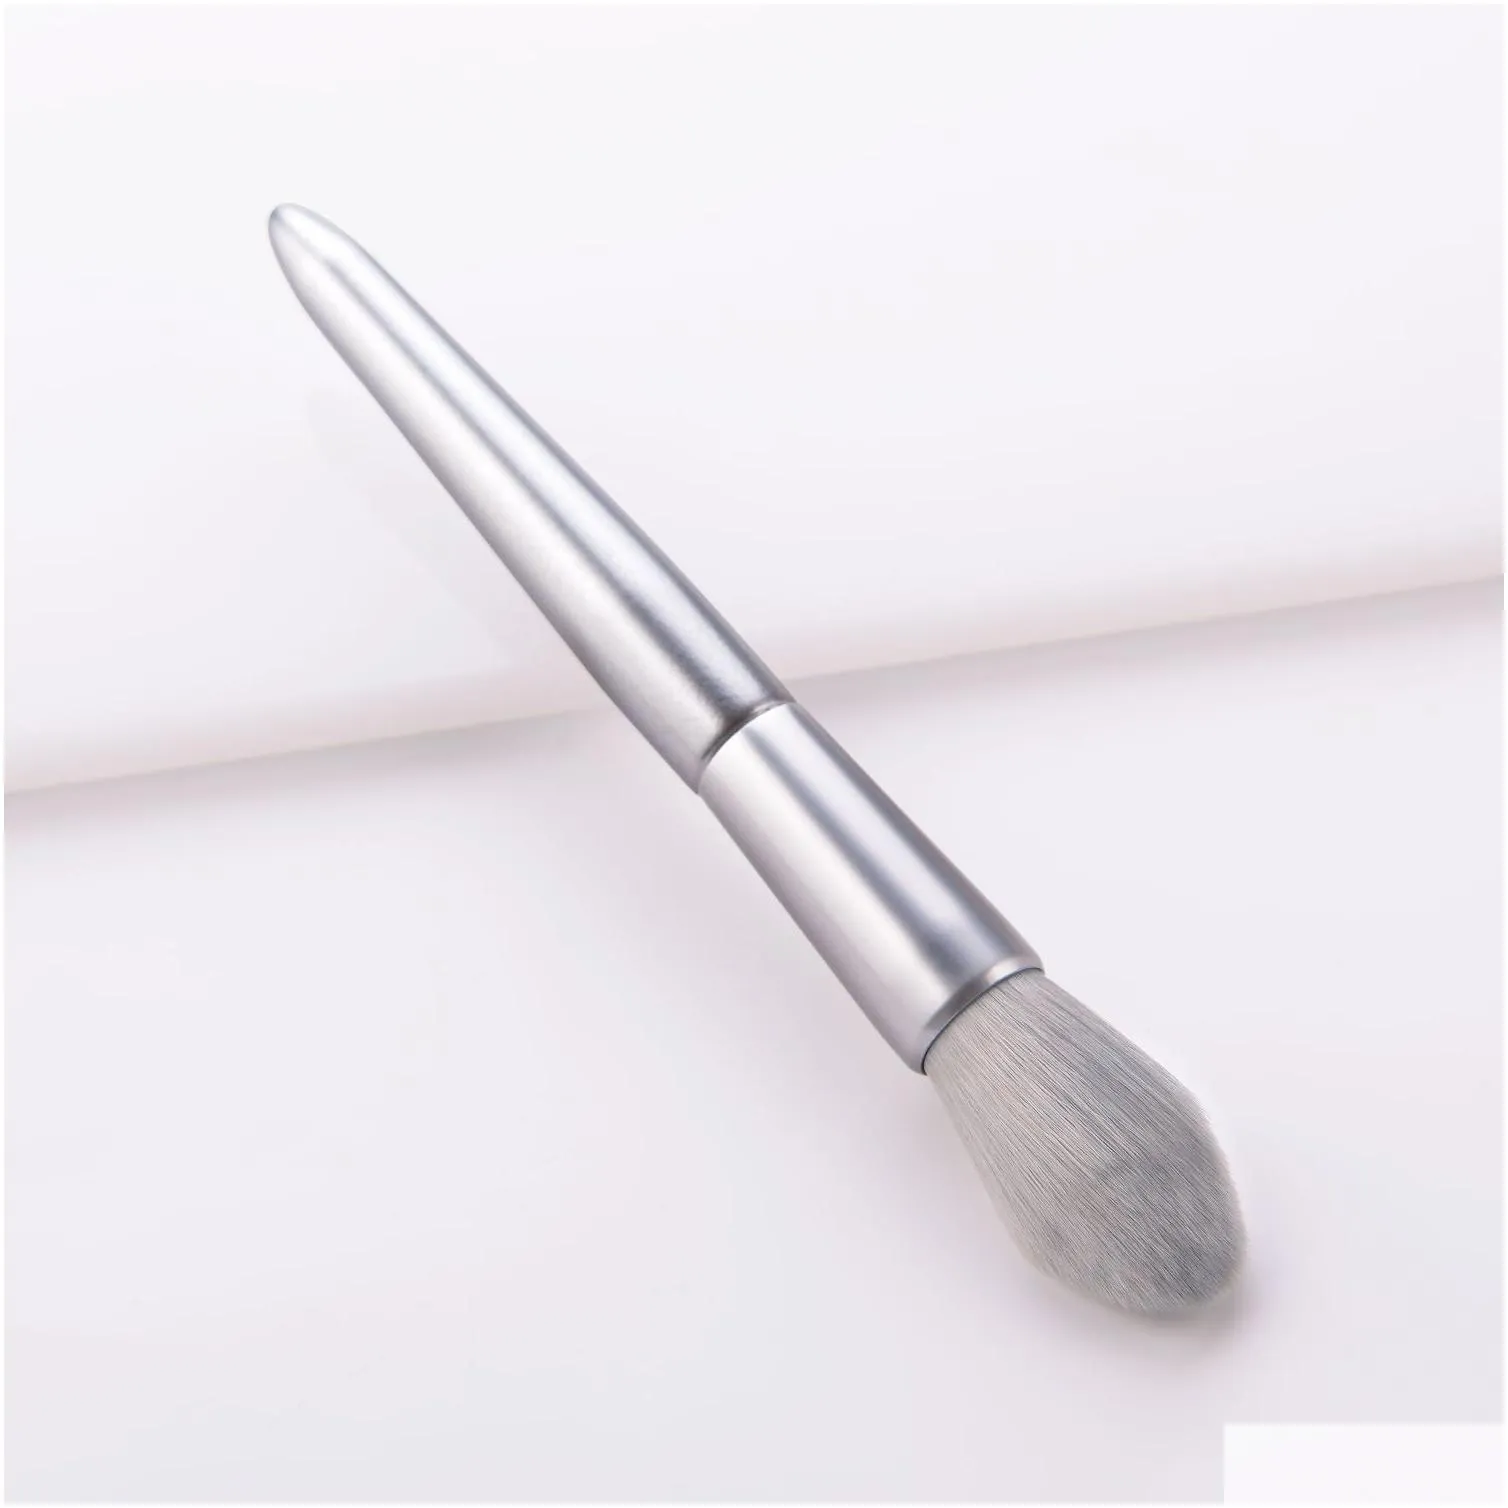 8pcs elegant silver handle makeup brush set gray hair foundation eyeshadow cosmetic Make Up brush set kit flame brush Beauty